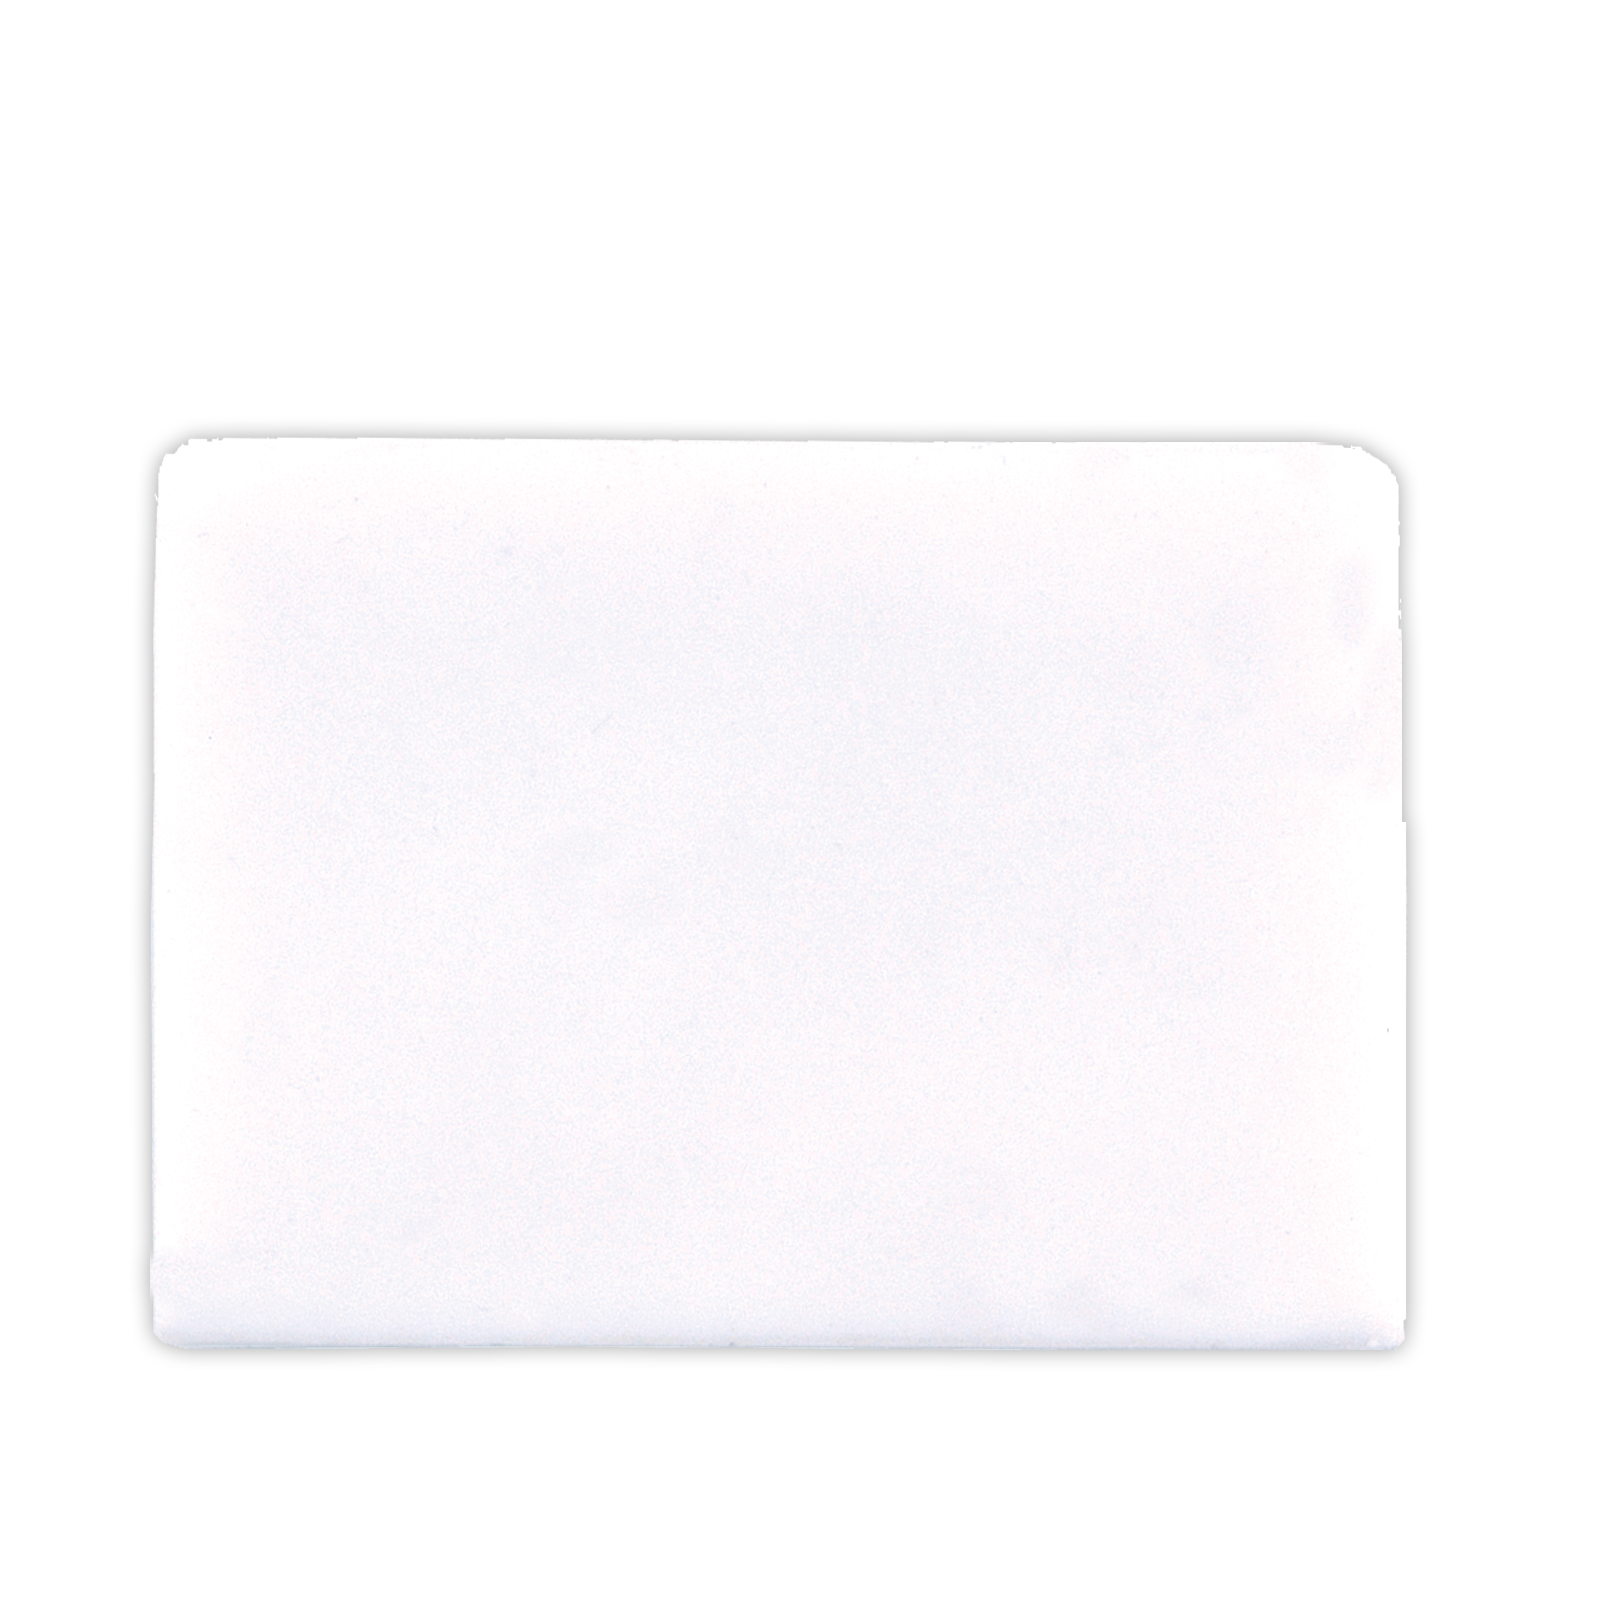 Stationery White Eraser eraser